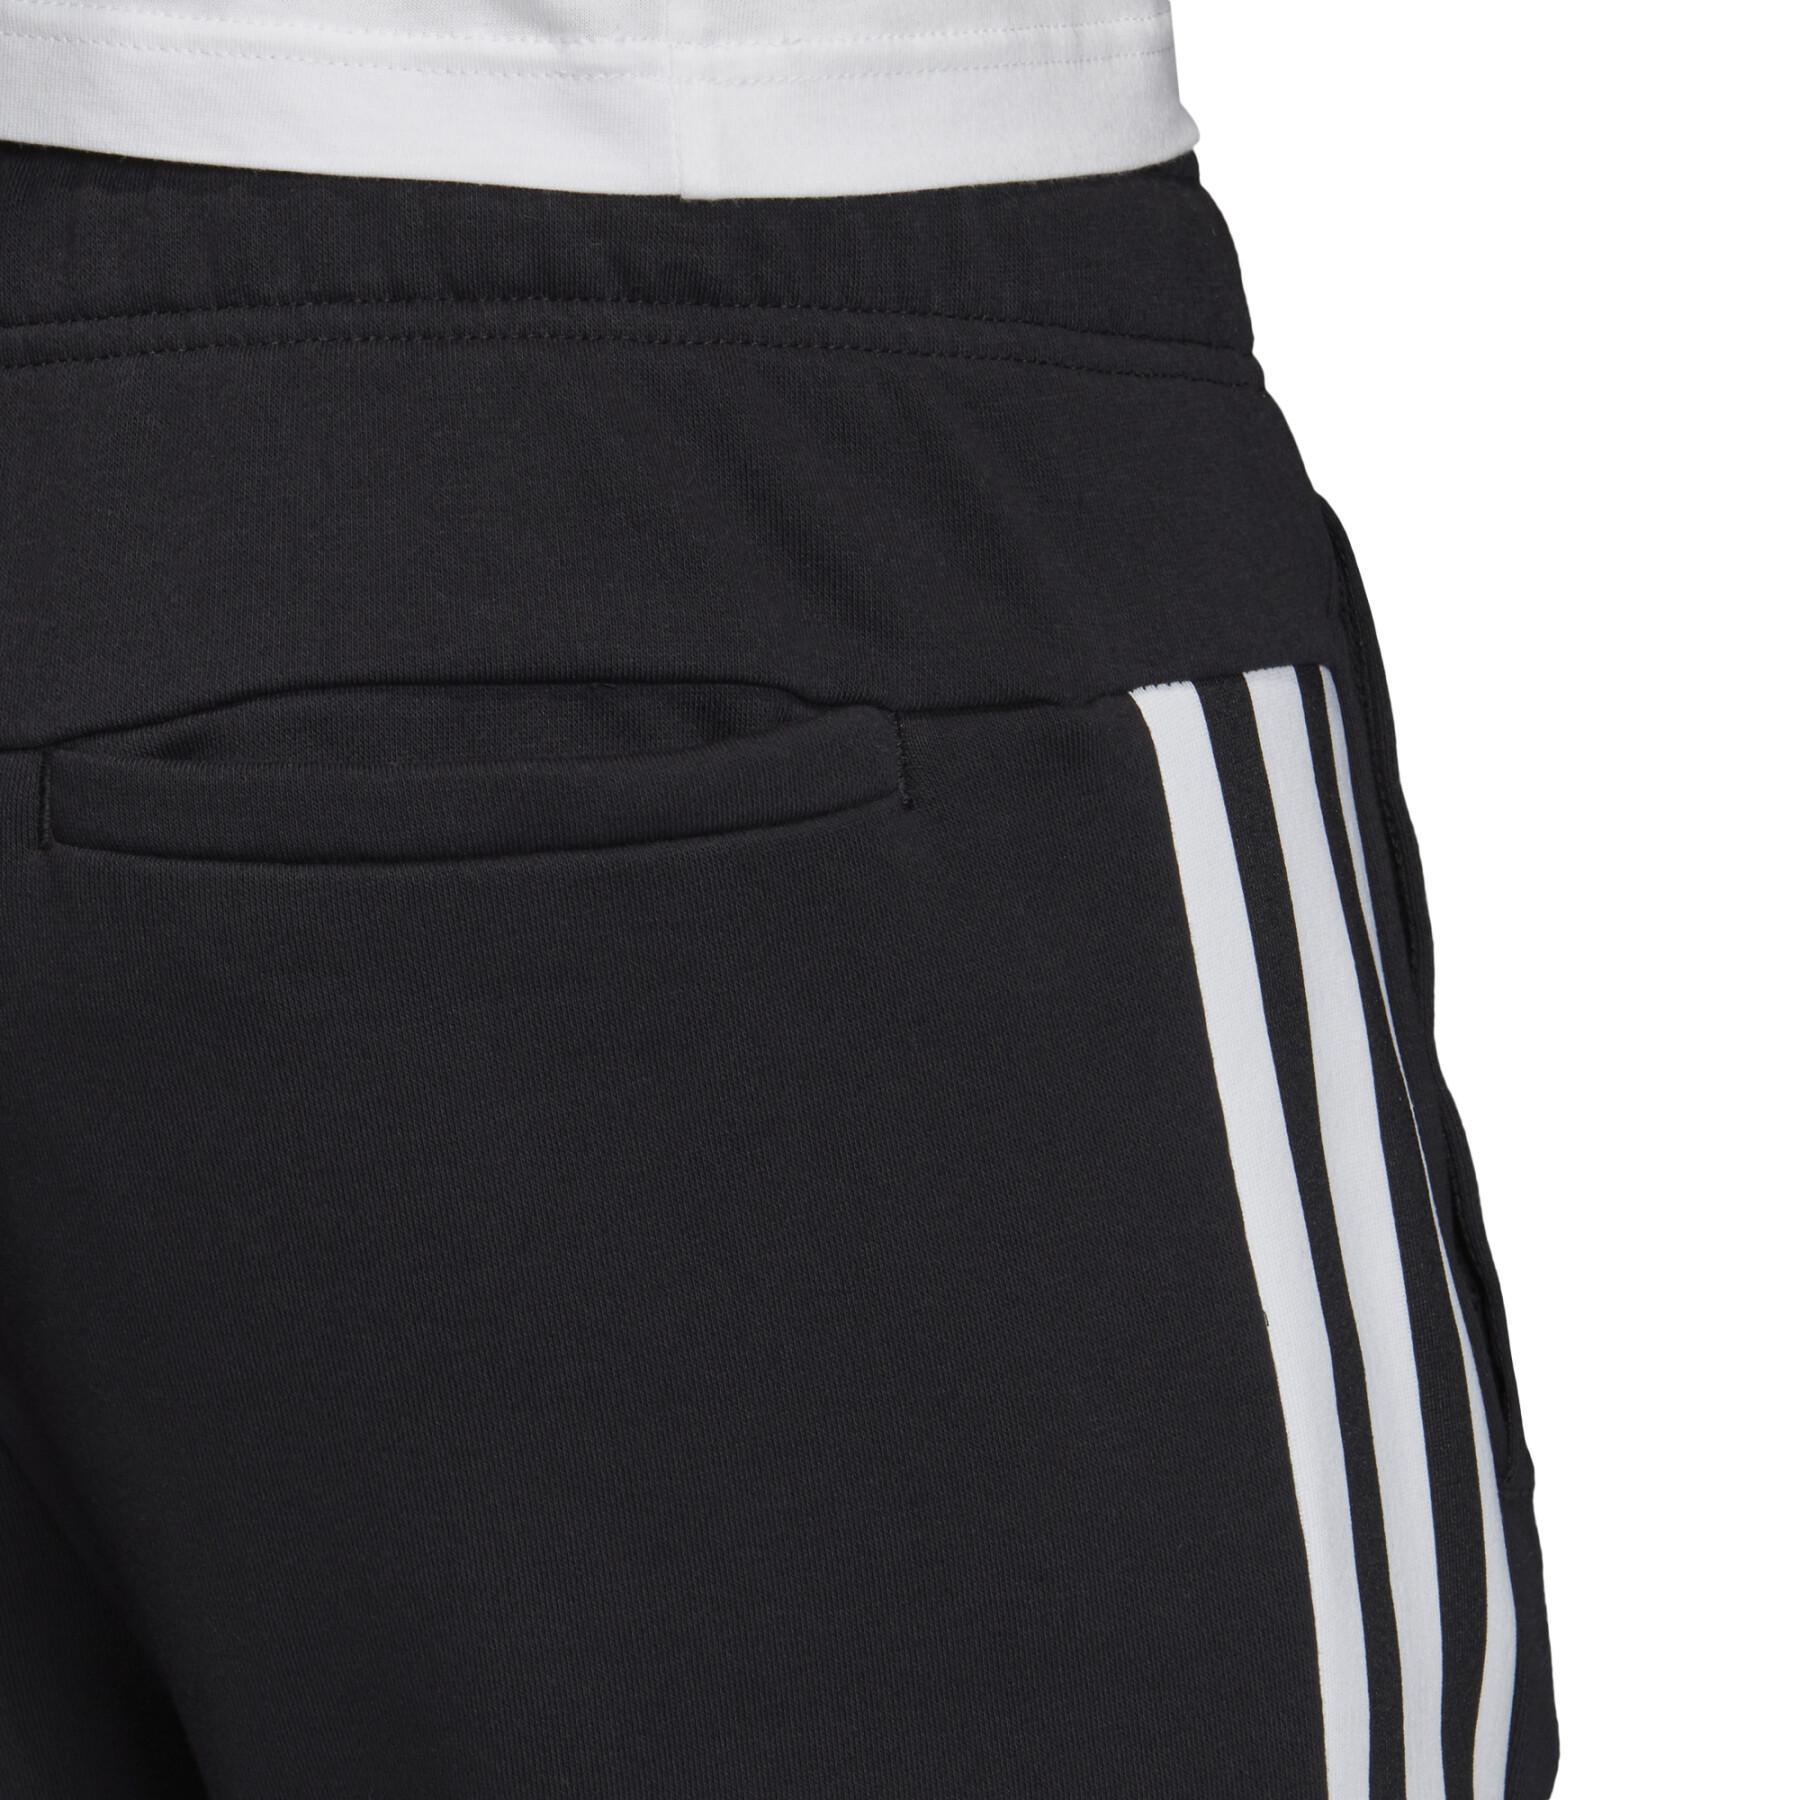 Pantalon adidas 3-Stripes Slim